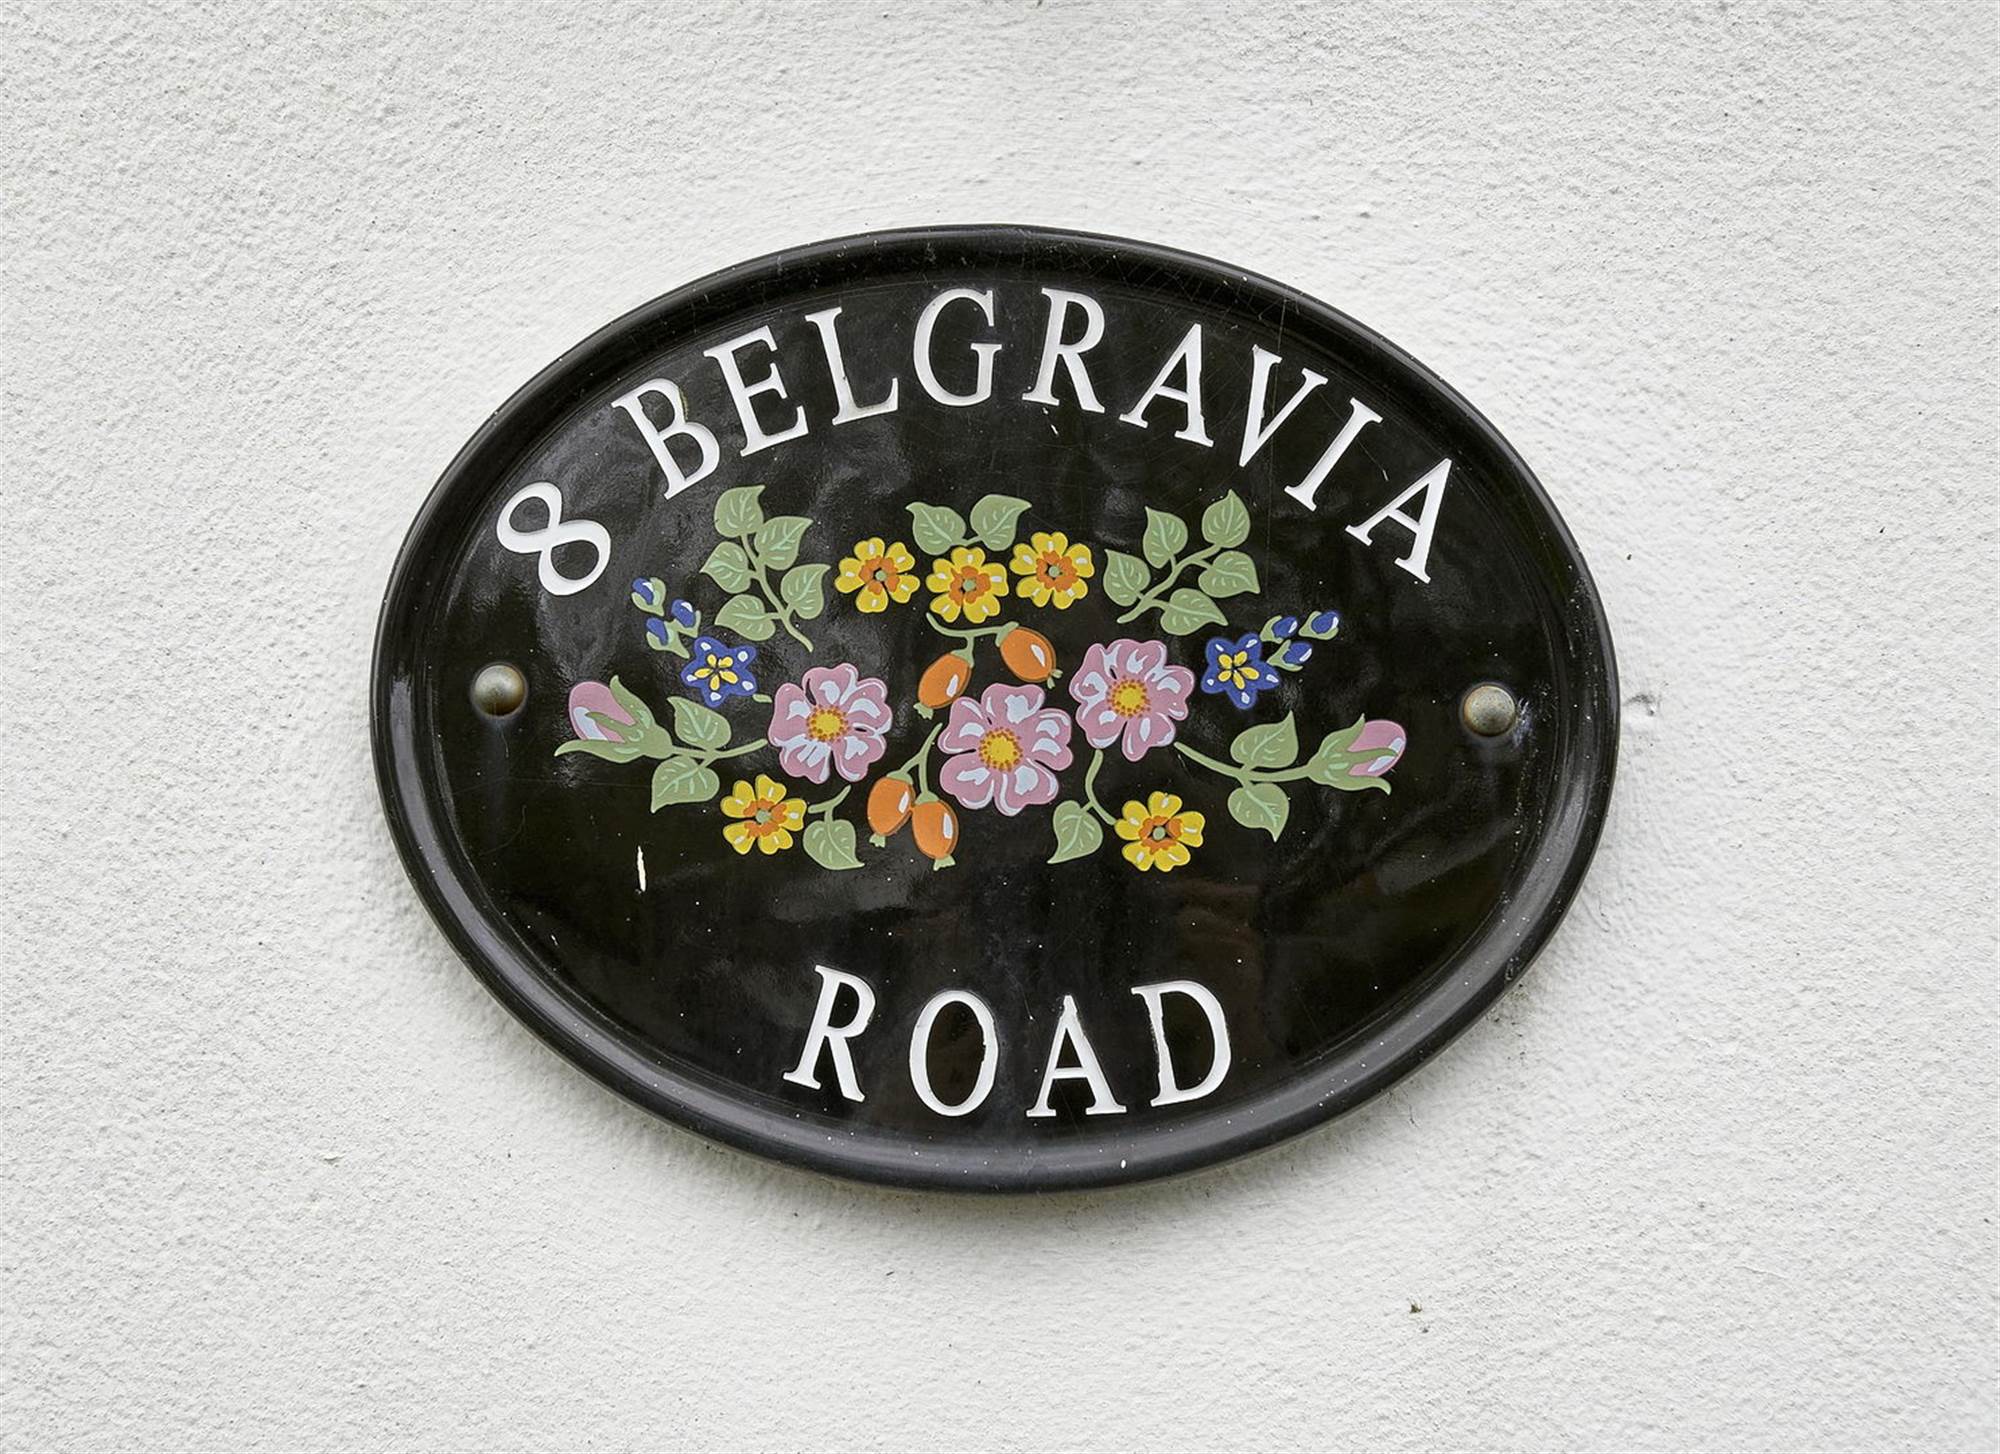 8 Belgravia Road